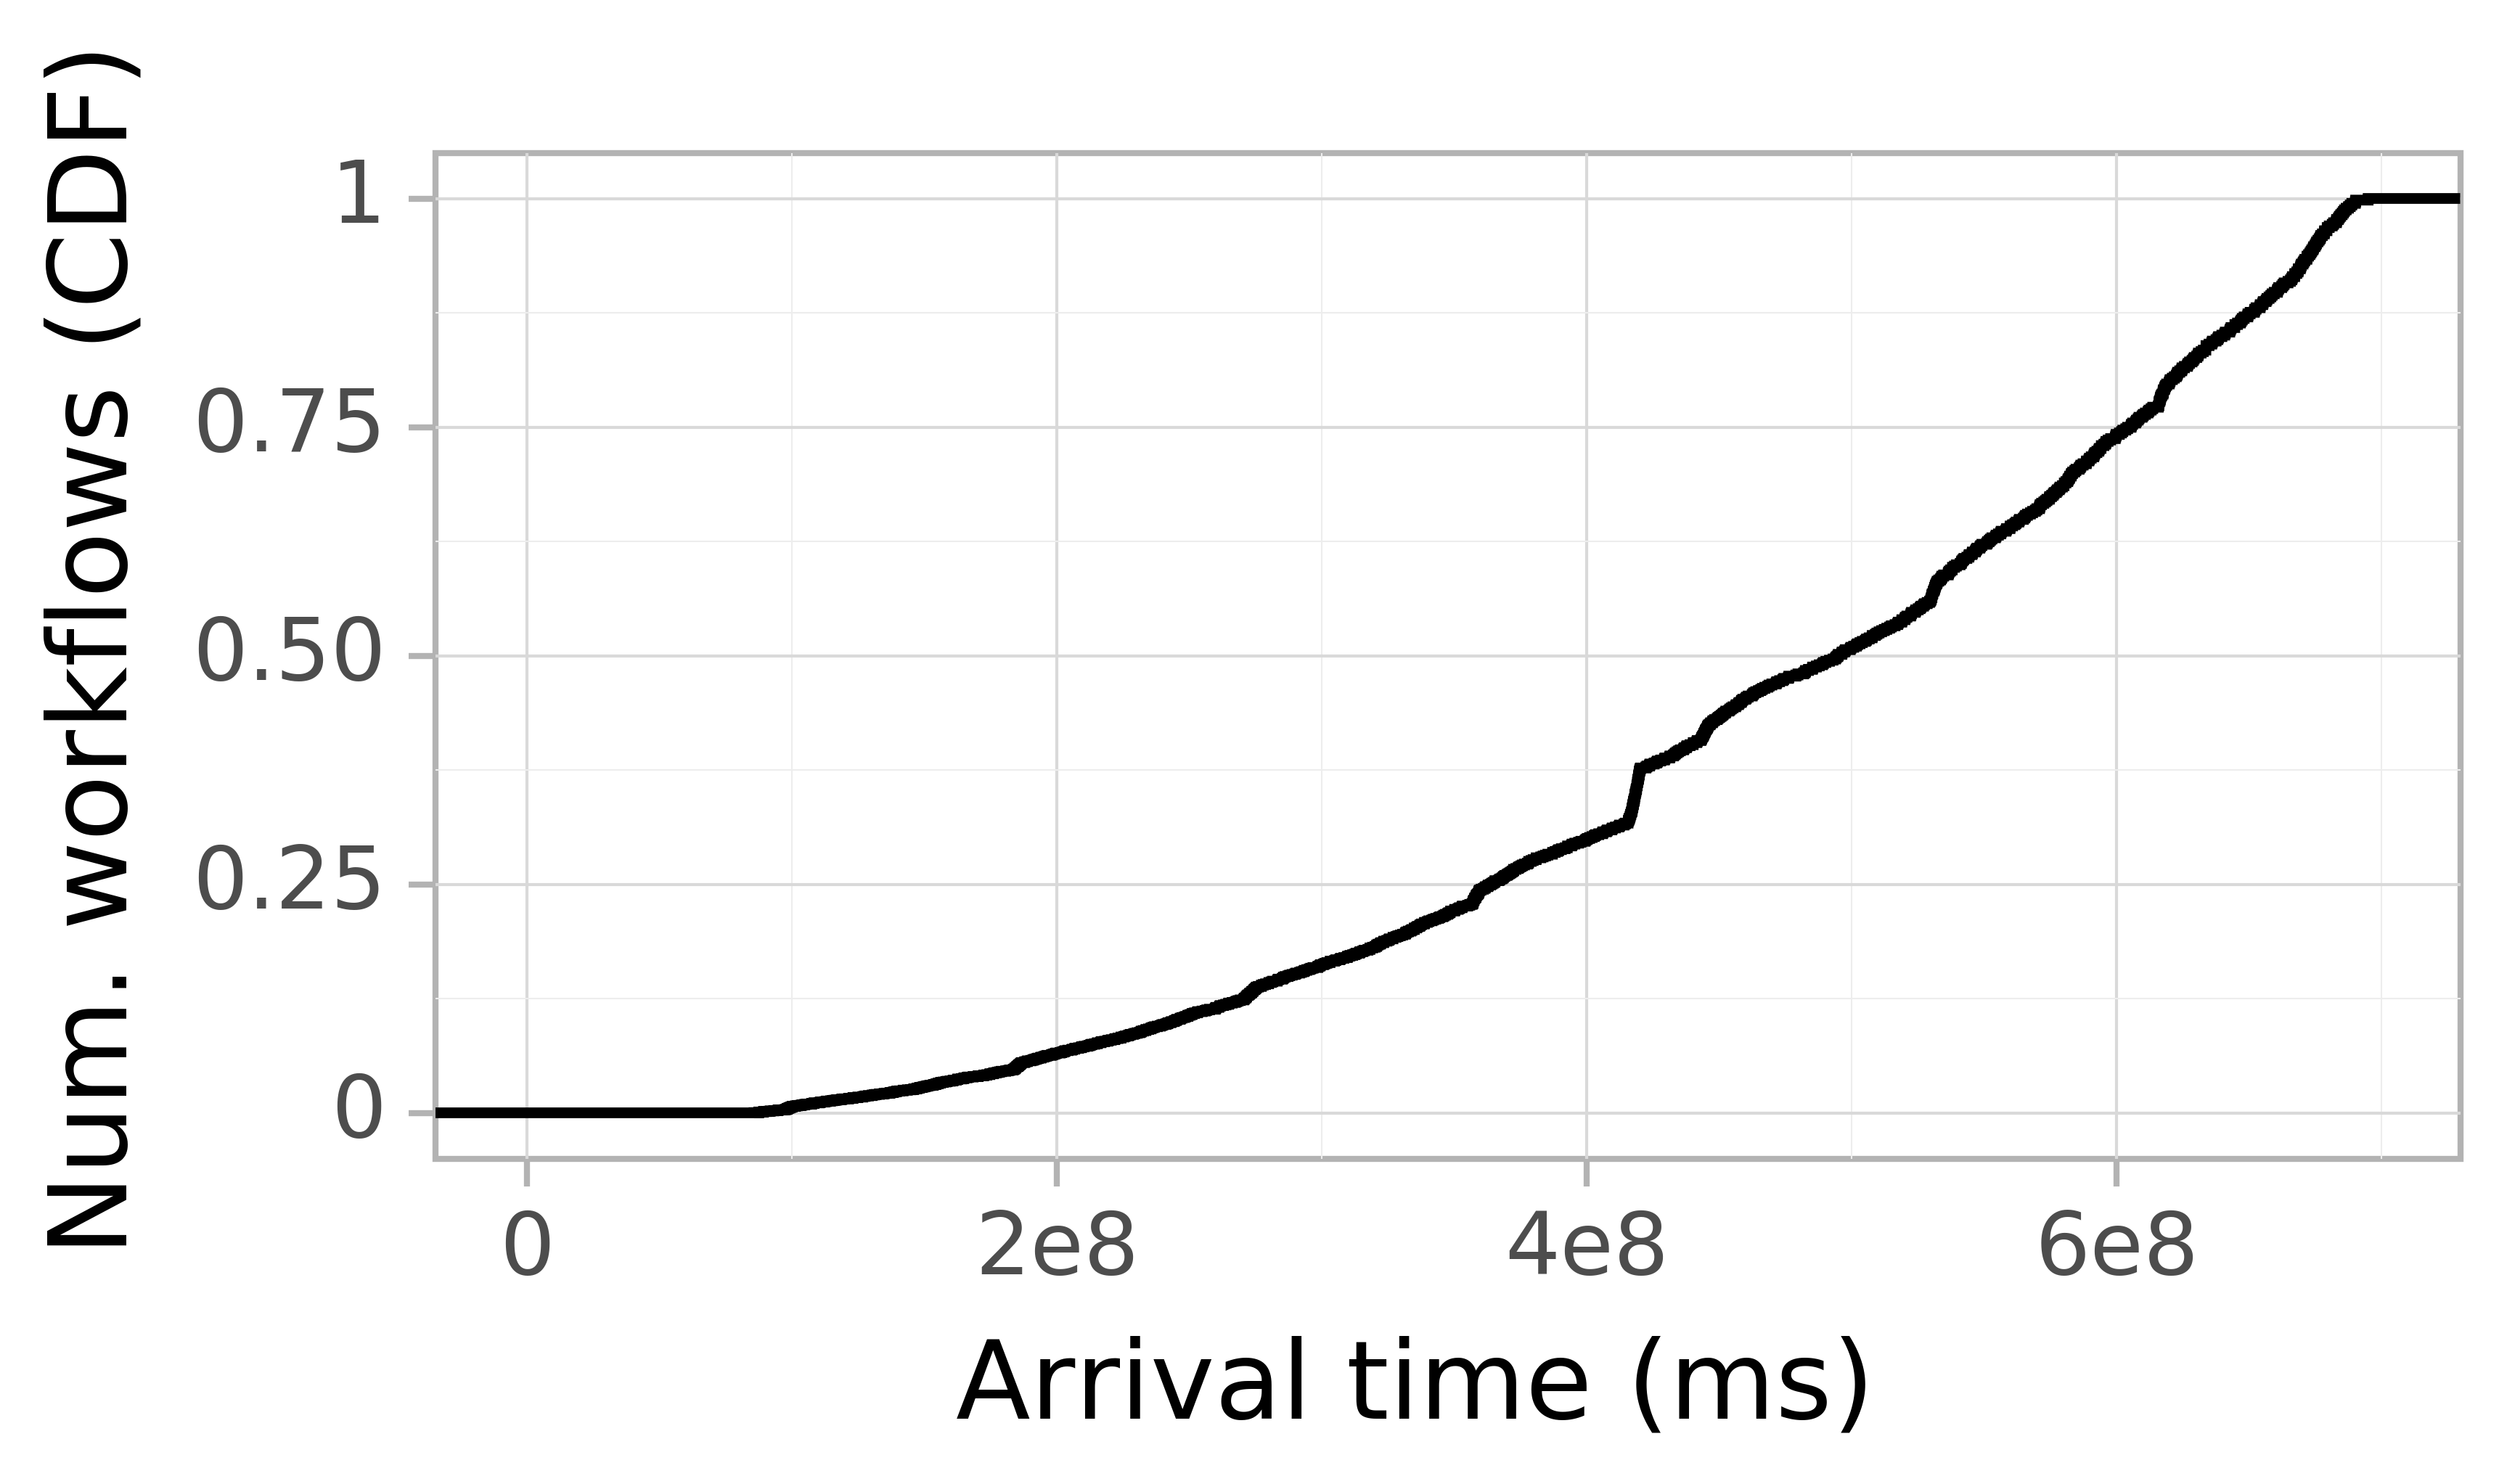 Job arrival CDF graph for the alibaba2018 trace.